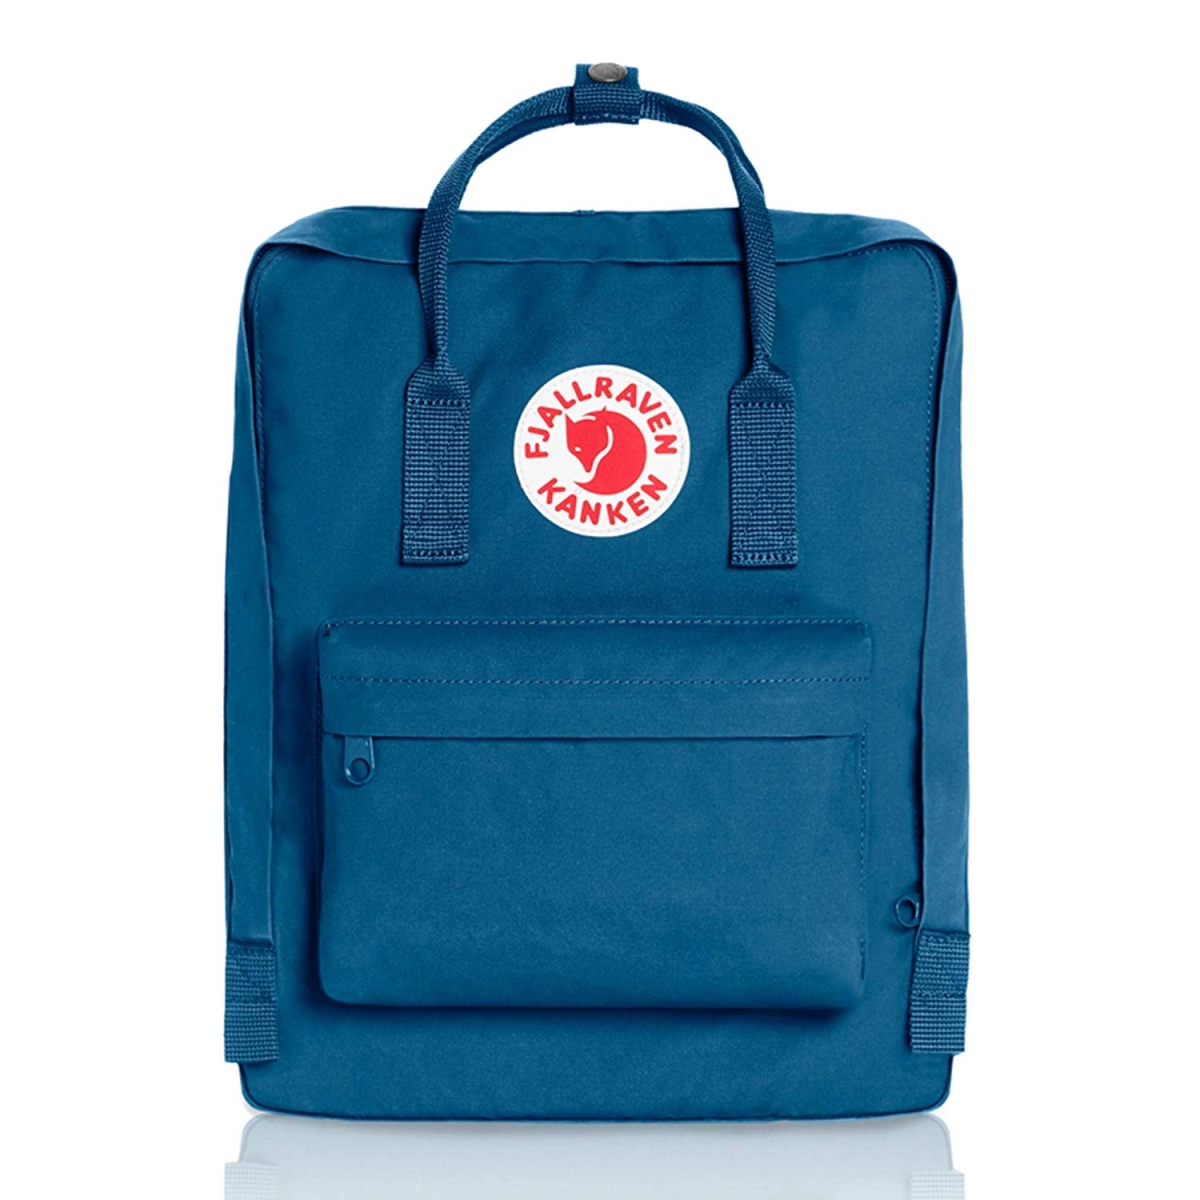 23510-539 Kanken Classic Backpack For Everyday, Lake Blue